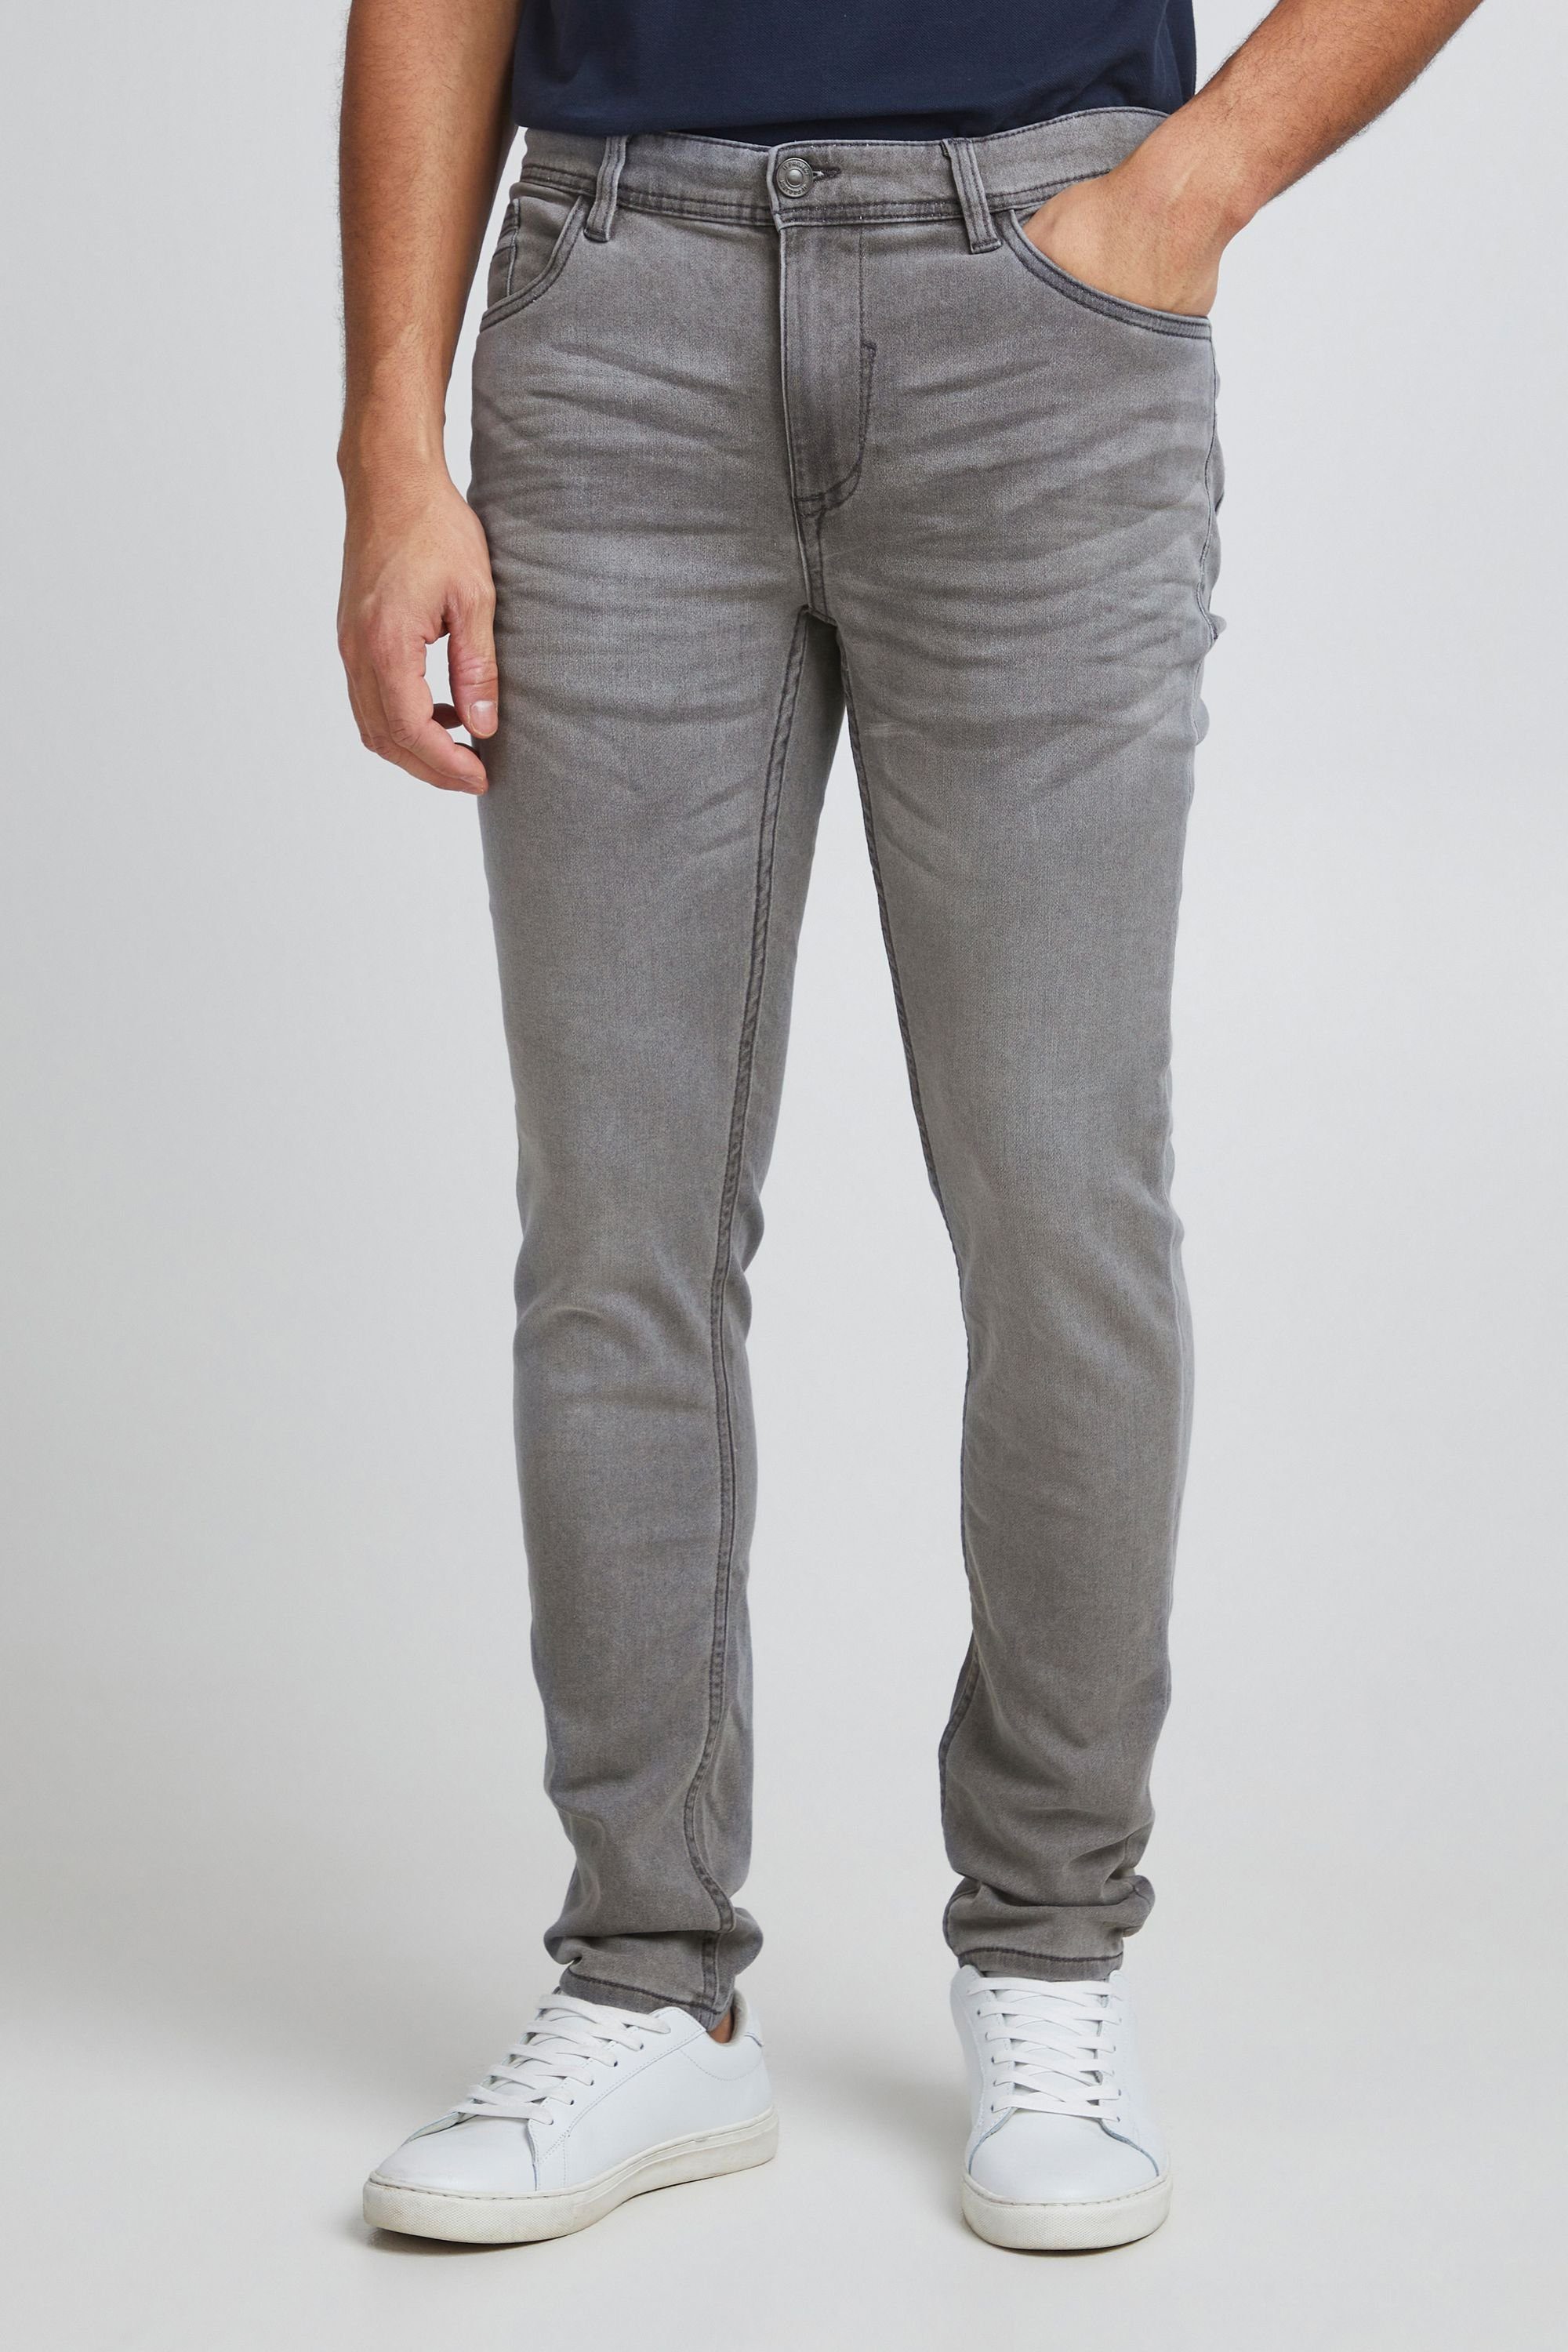 PRBergson Denim Project 11 Project 11 grey 5-Pocket-Jeans